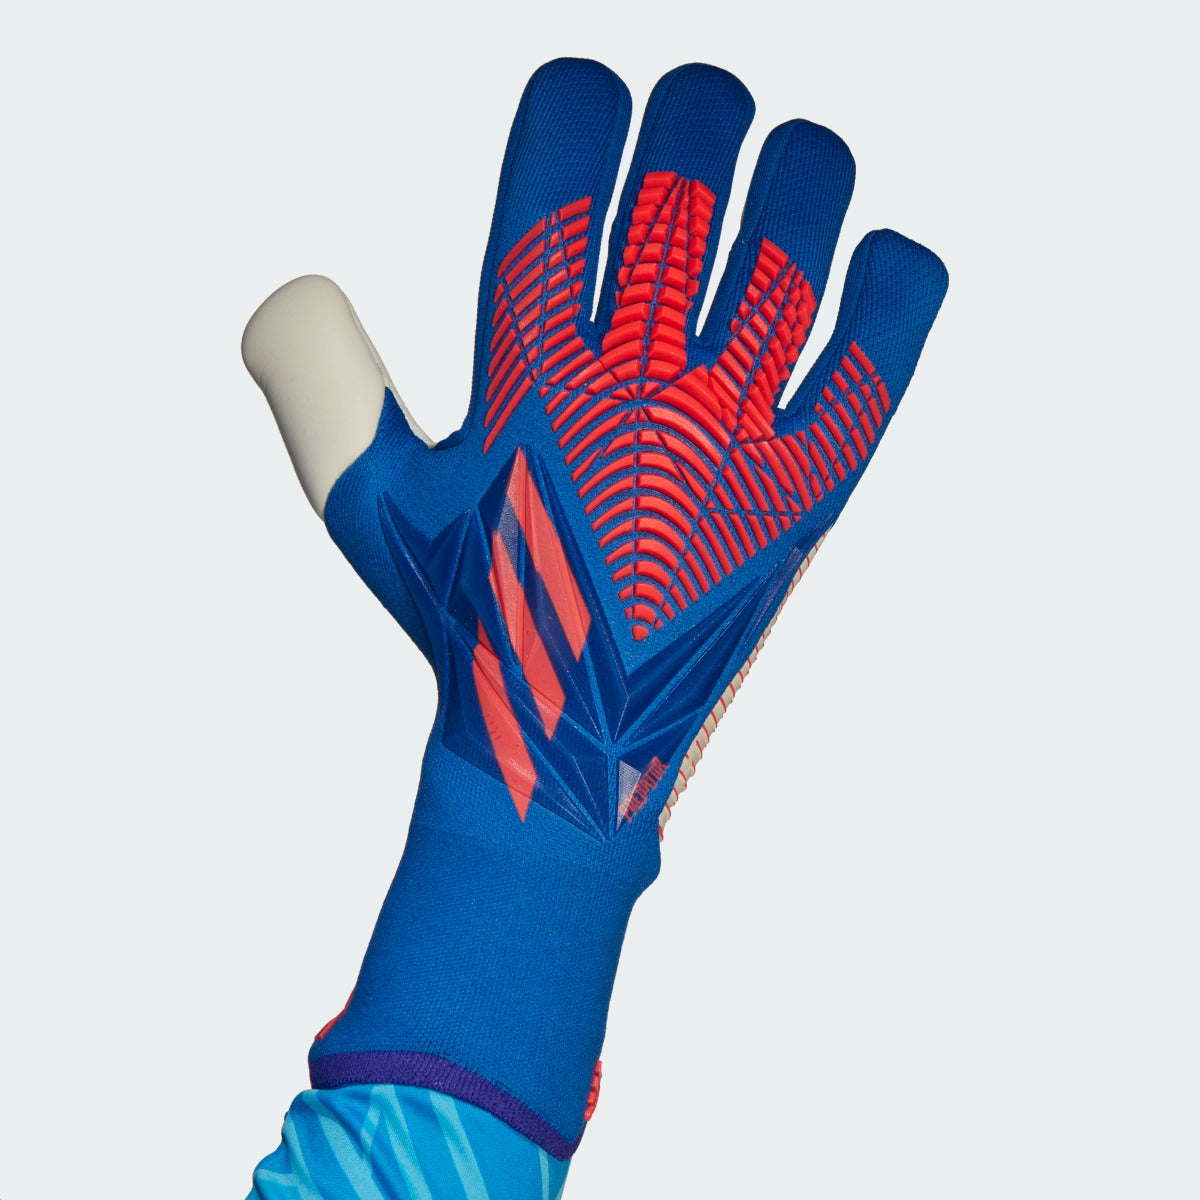 Adidas Predator Pro Goalkeeper Gloves (Negative Cut) - Royal-Red (Single - Outer)